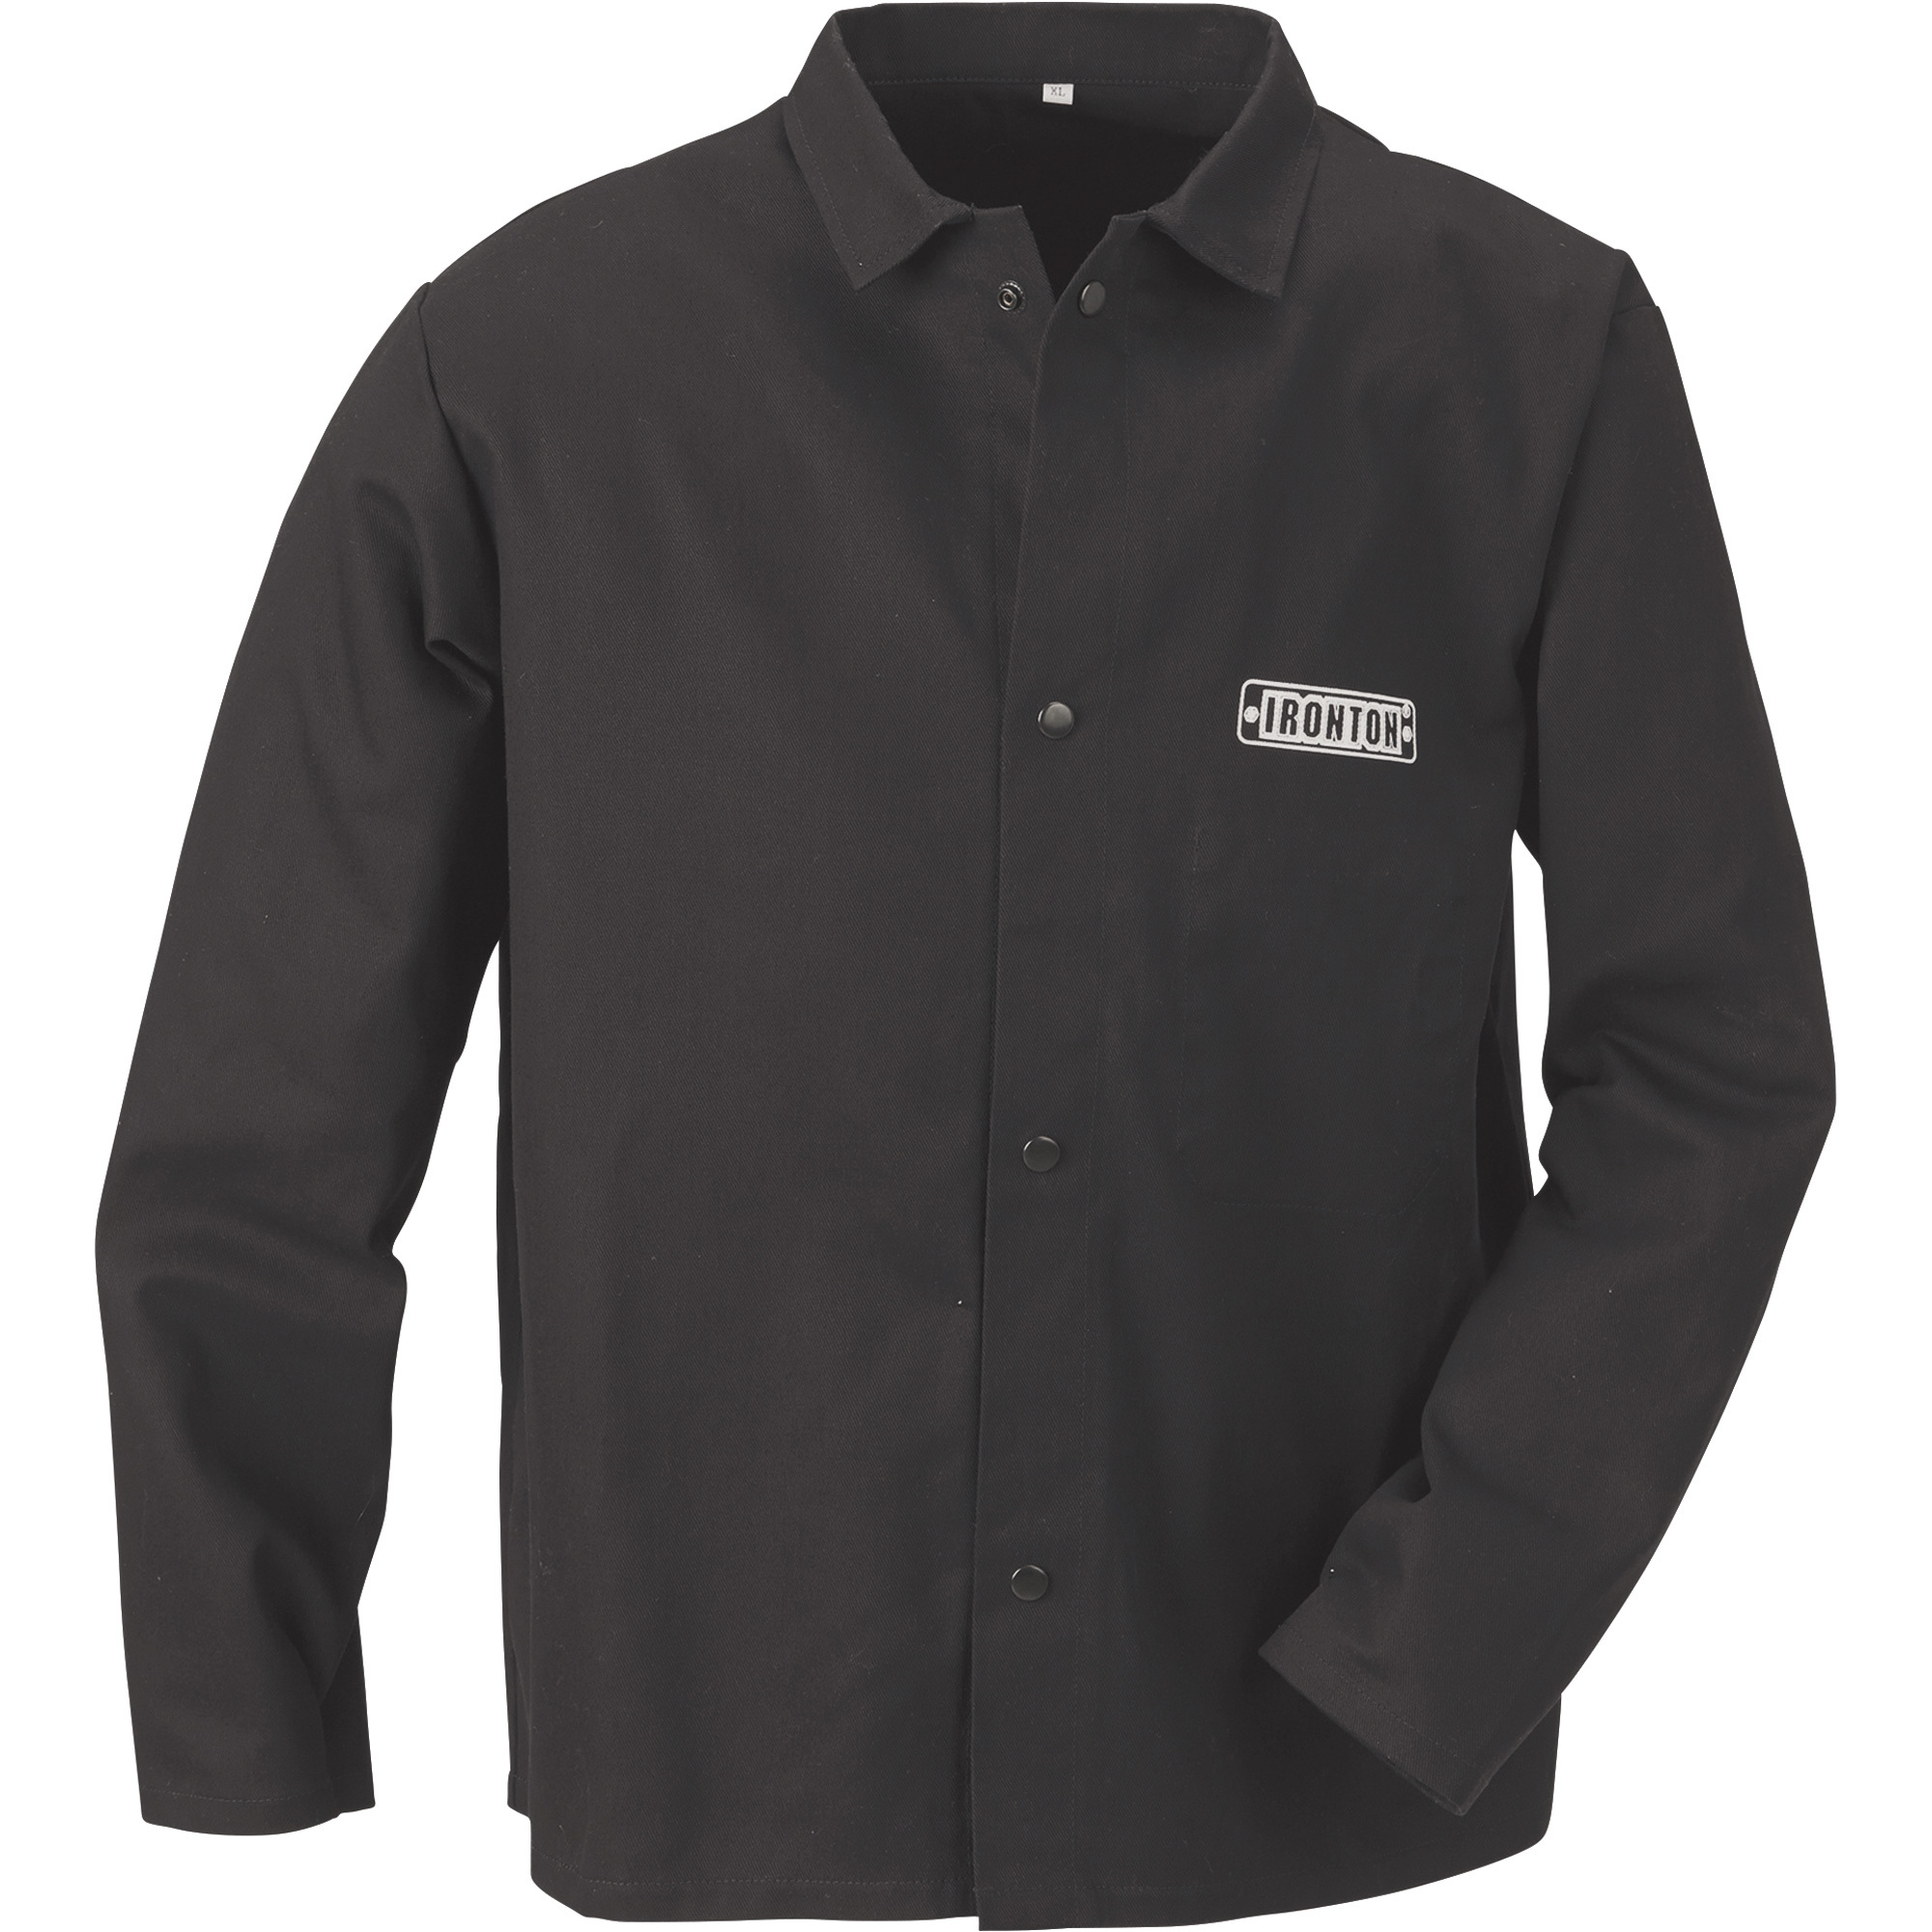 Ironton Flame-Resistant Welding Jacket â Medium, Black